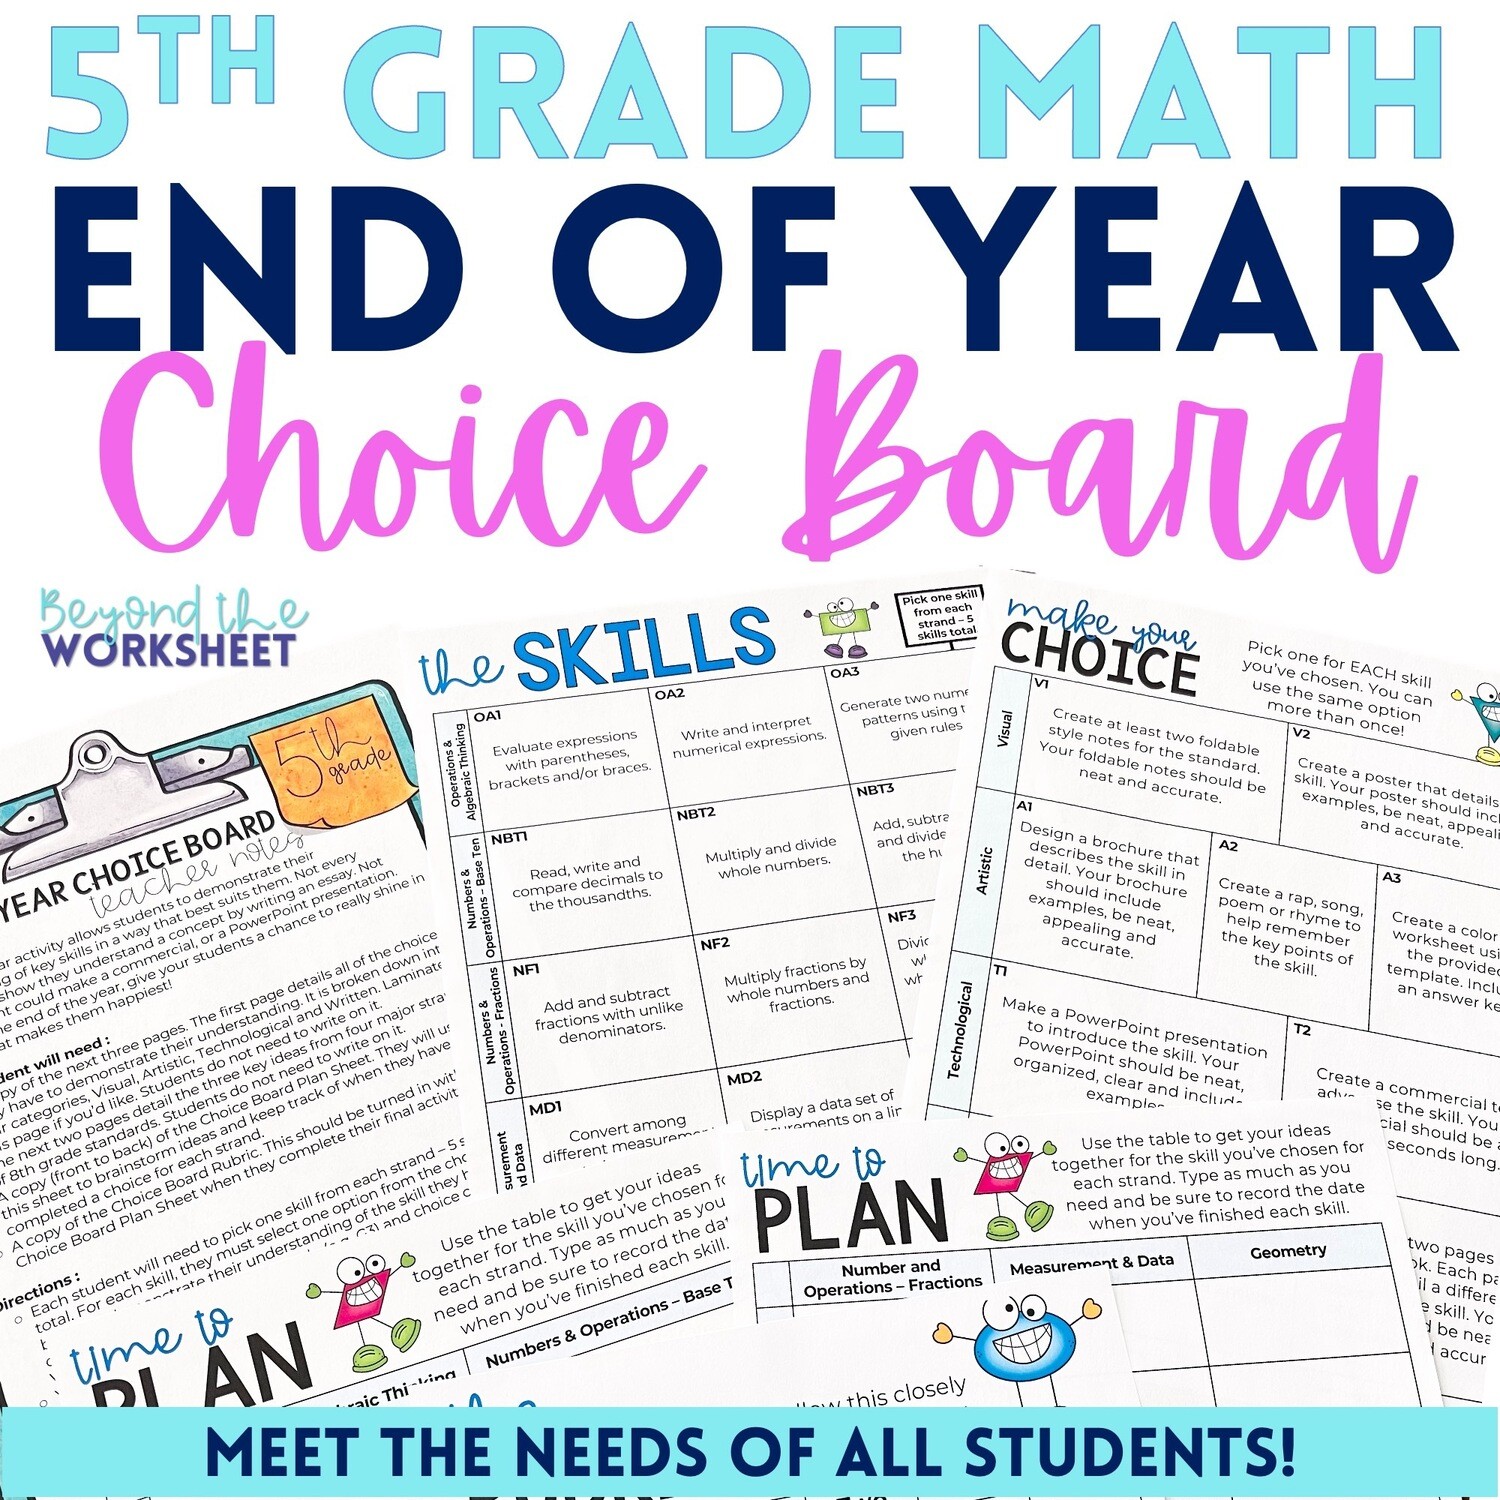 5th Grade Math End of Year Choice Board